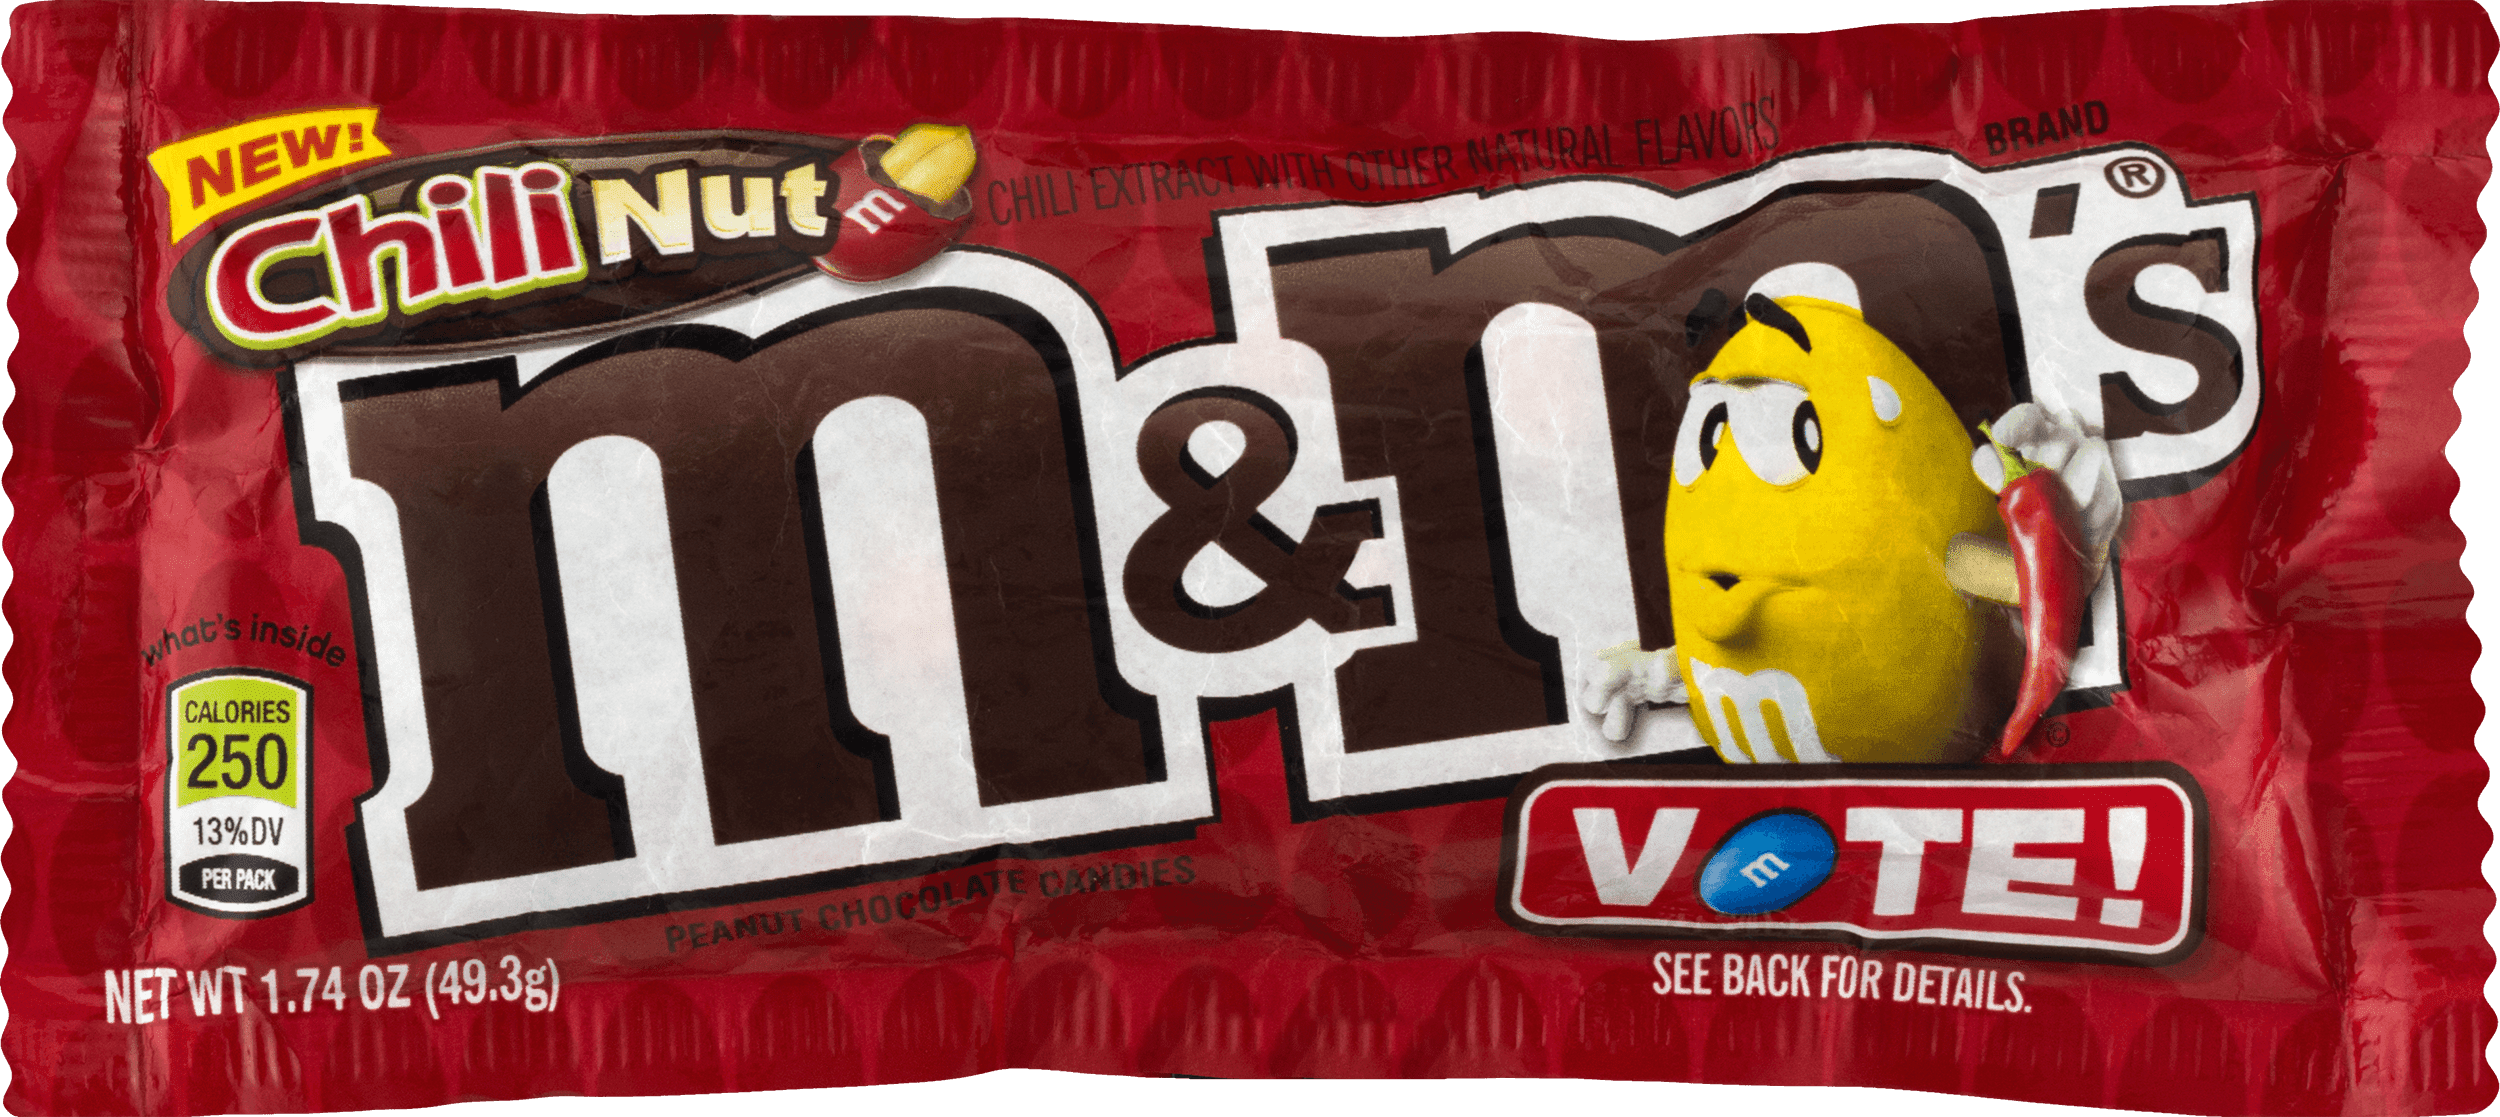 M&M'S Chili Nut Peanut Chocolate Candy Bag, 1.74 oz